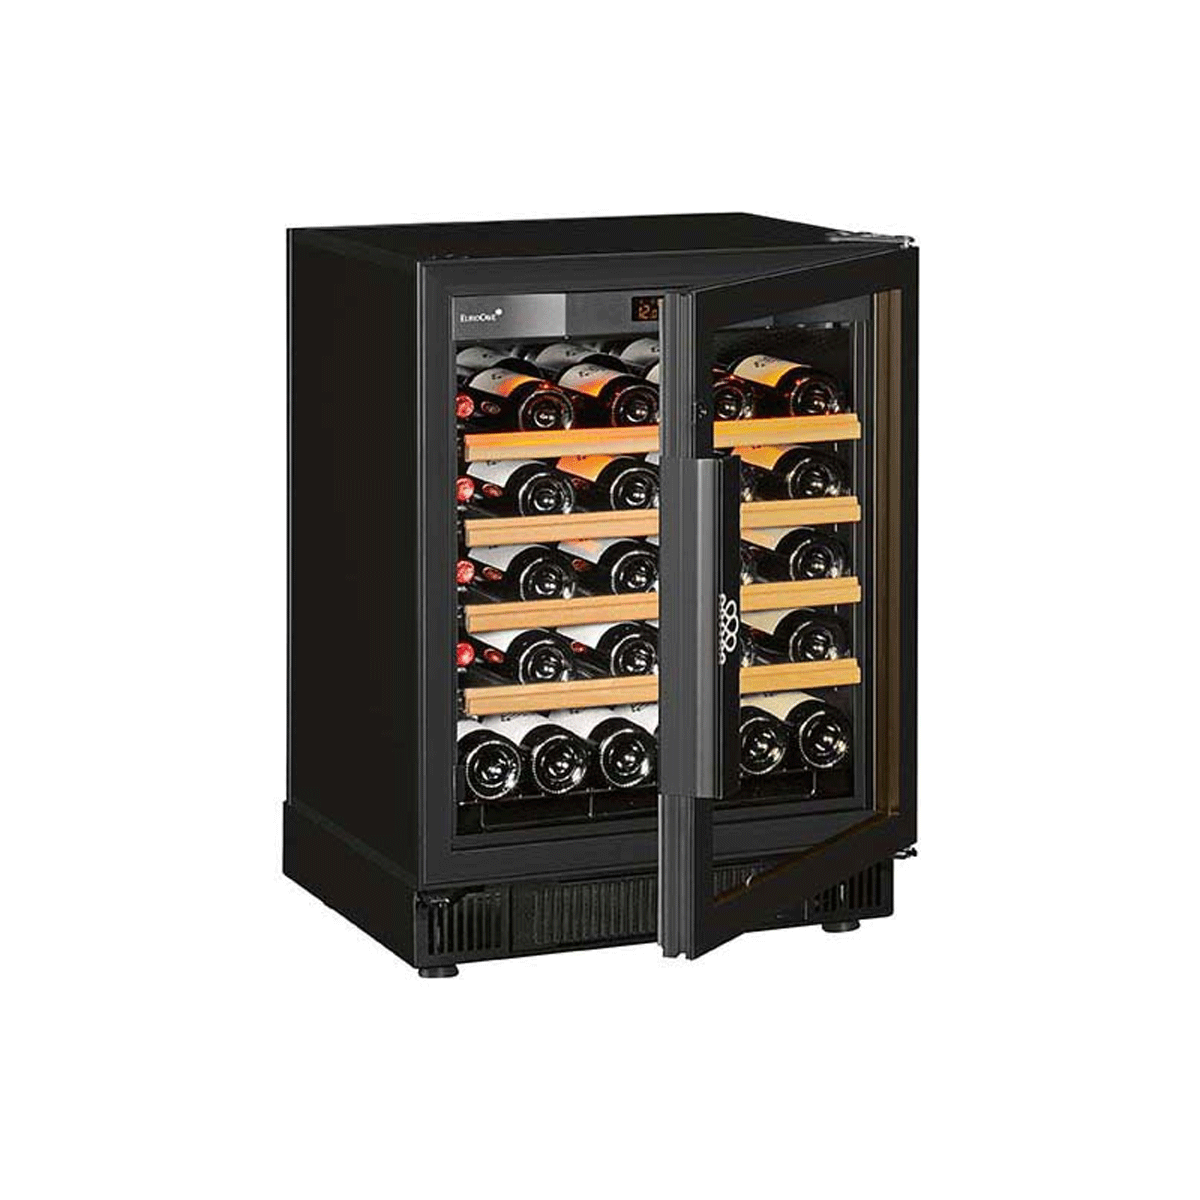 【Eurocave】V-059V3 Maturing 1 temperature wine cabinet Compact, Small model